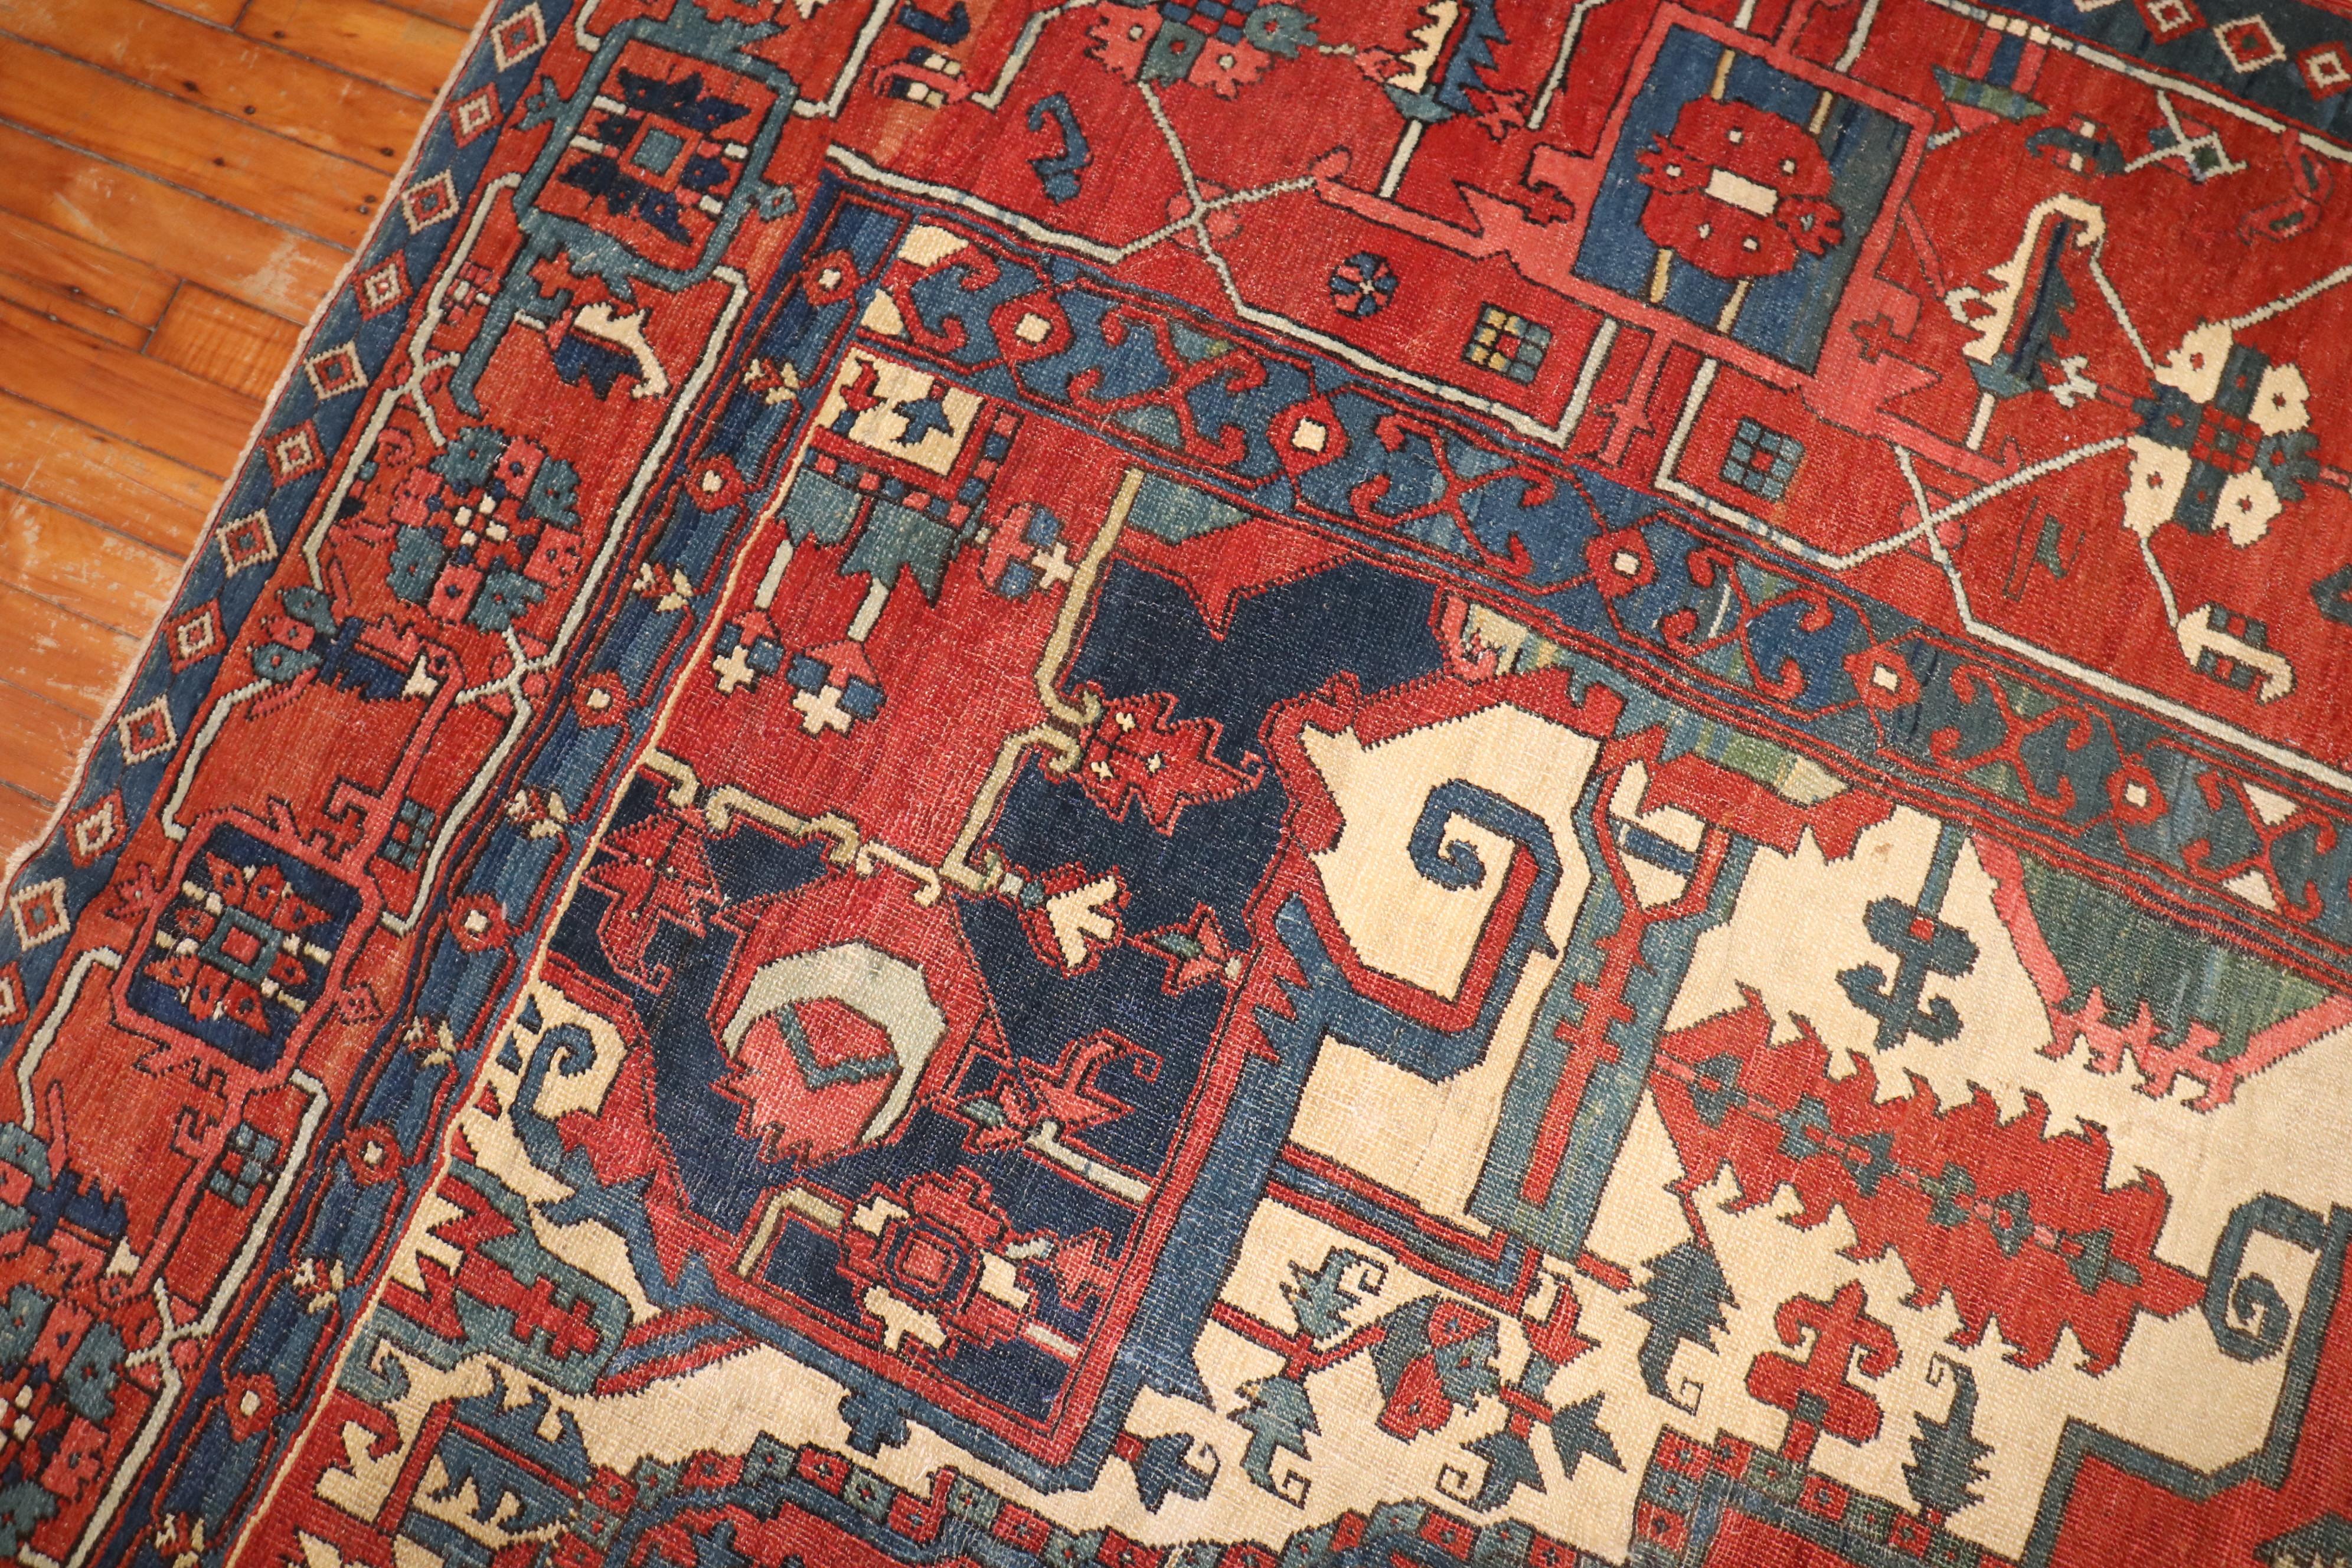 Zabihi Collection Pictorial Animal Figure Antique Persian Serapi Carpet For Sale 7